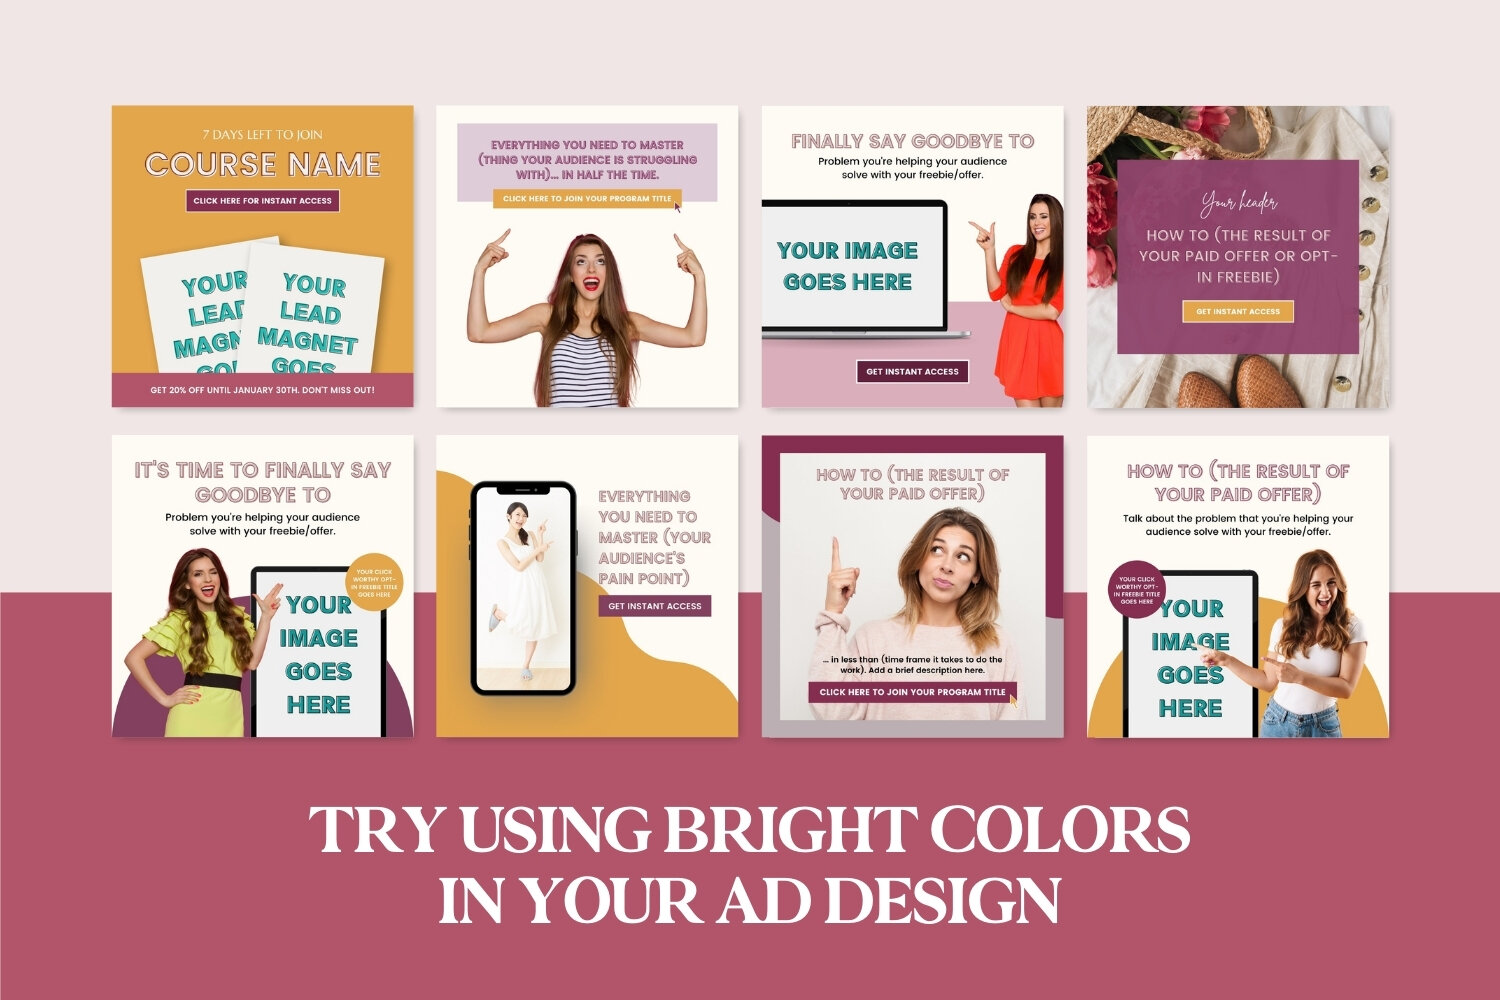 11 Facebook ad design tips to create an effective ad - 99designs